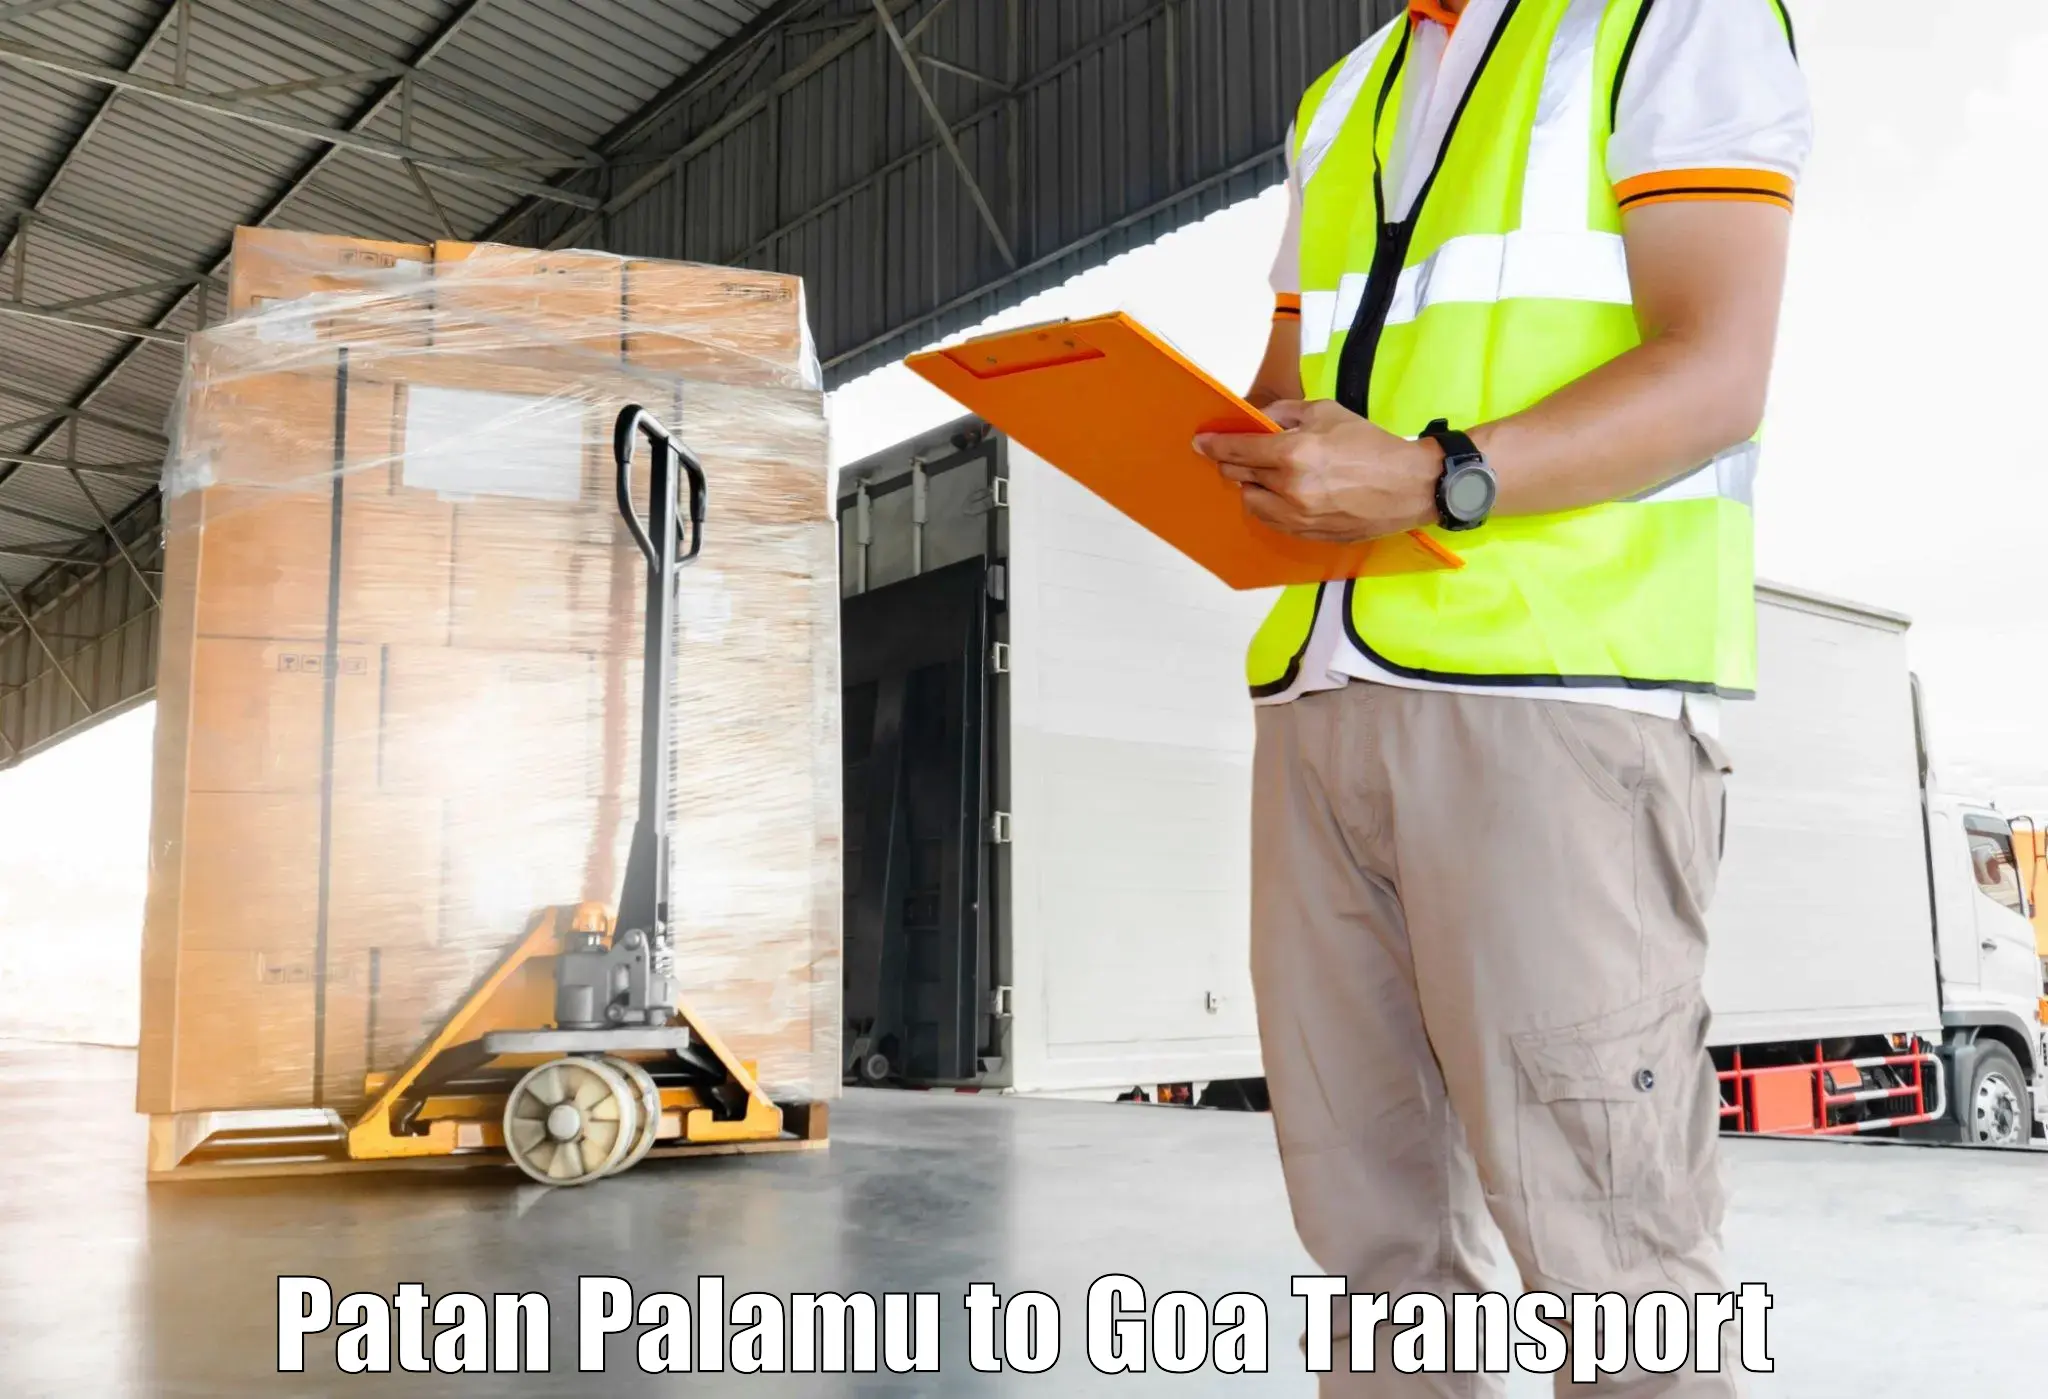 Transport in sharing Patan Palamu to Bardez